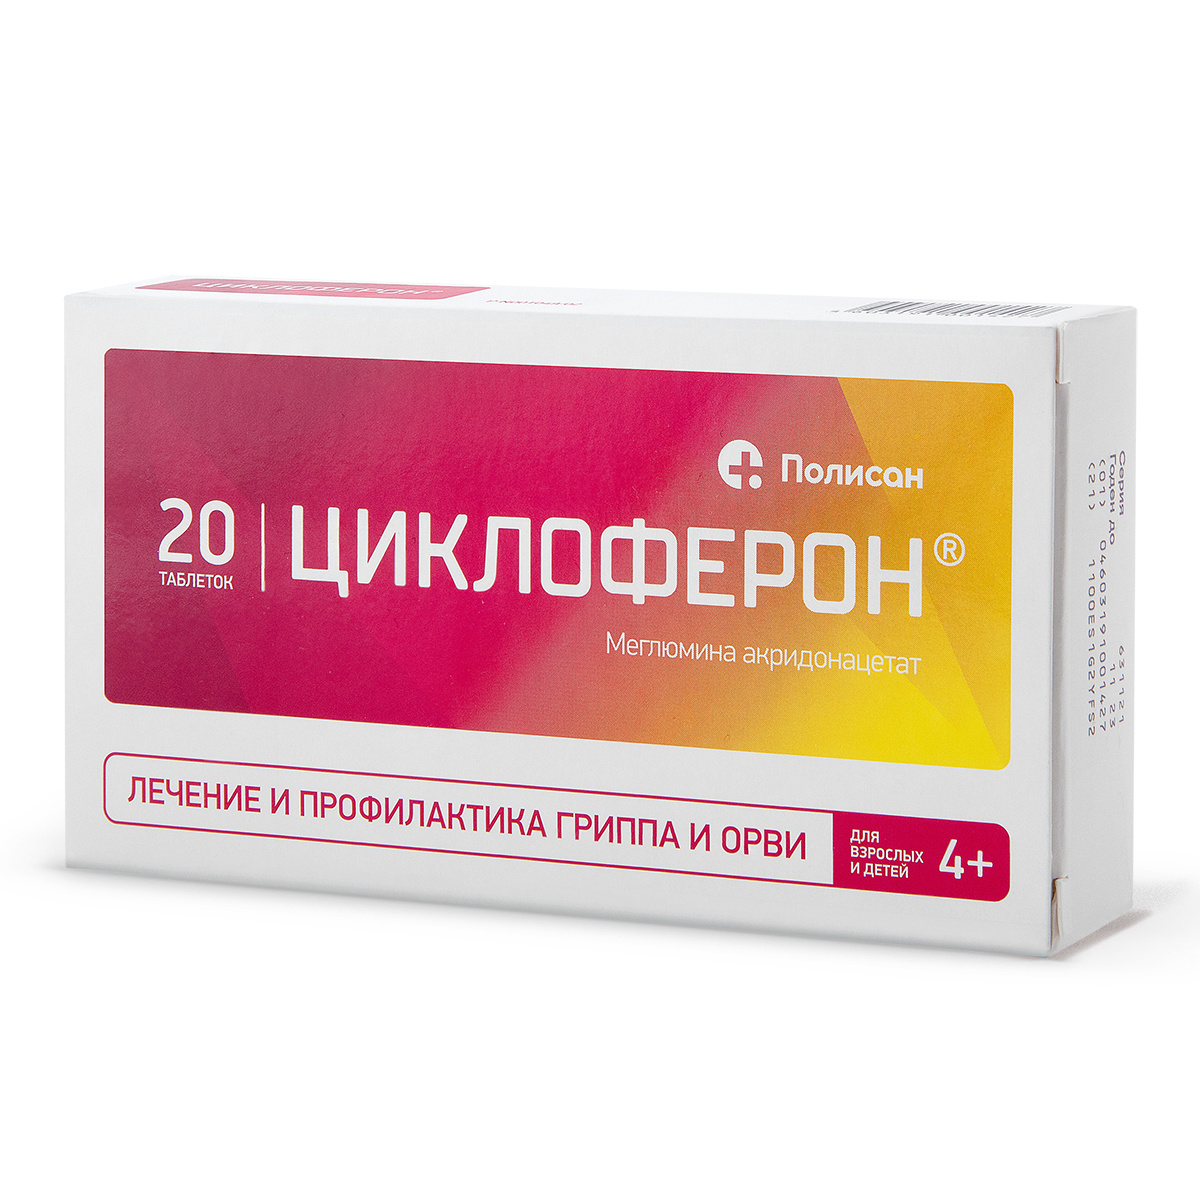 Циклоферон таблетки, противовирусные, 150 мг, 20 шт #1